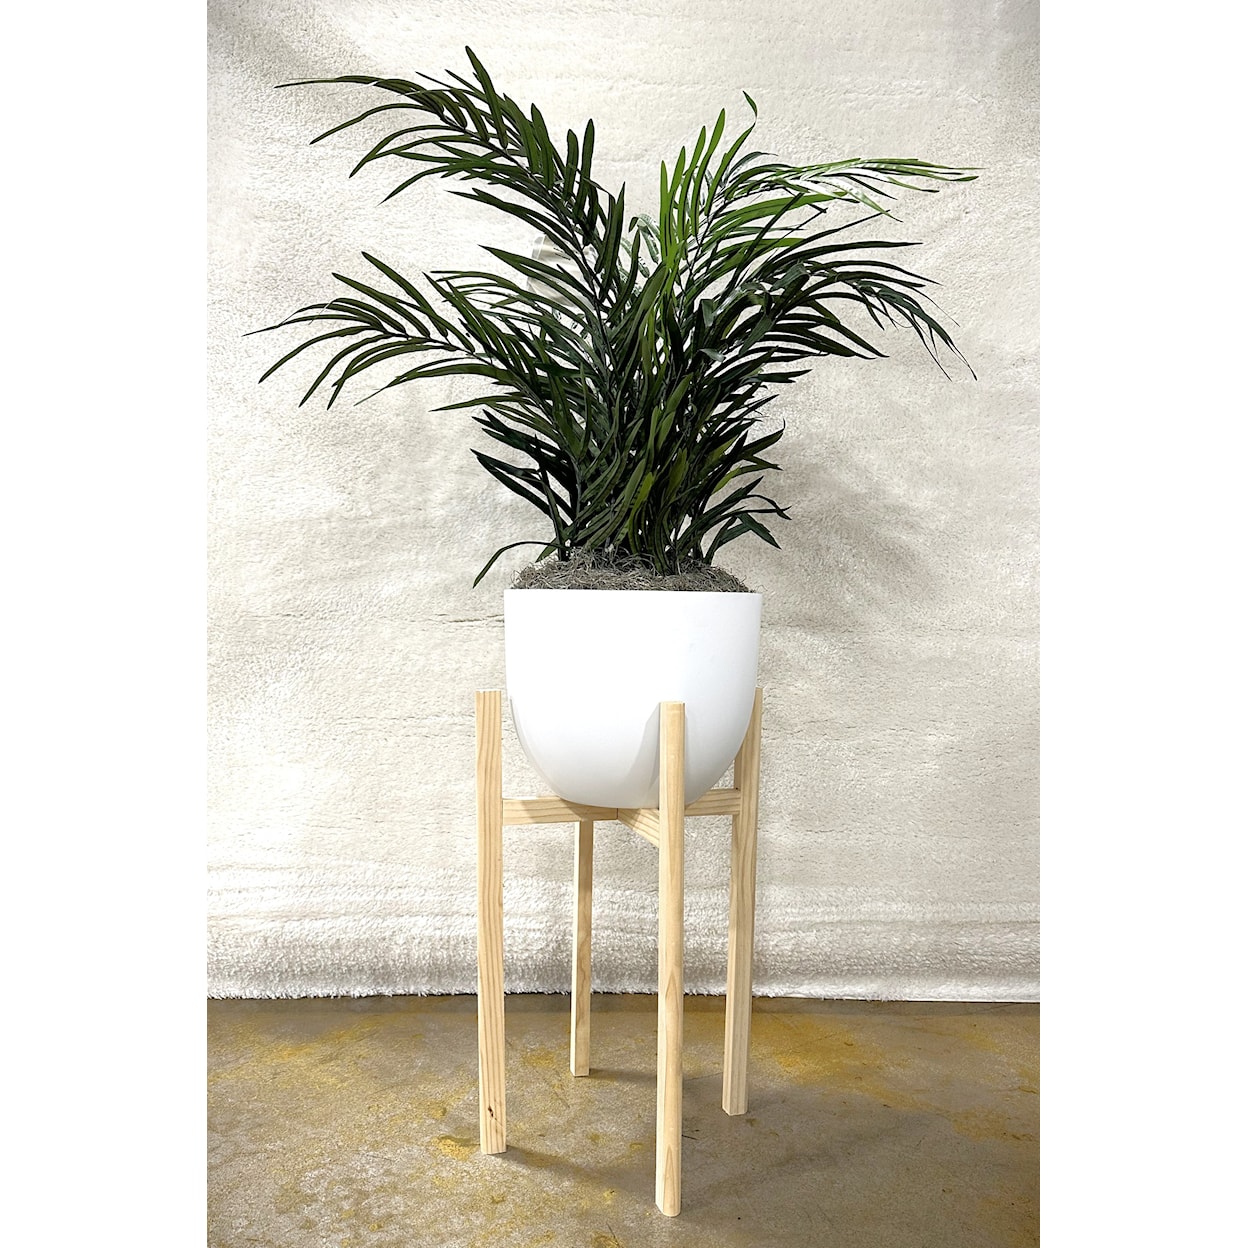 D&W Silks 109 Dwarf Areca Palm In White Planter With Stand